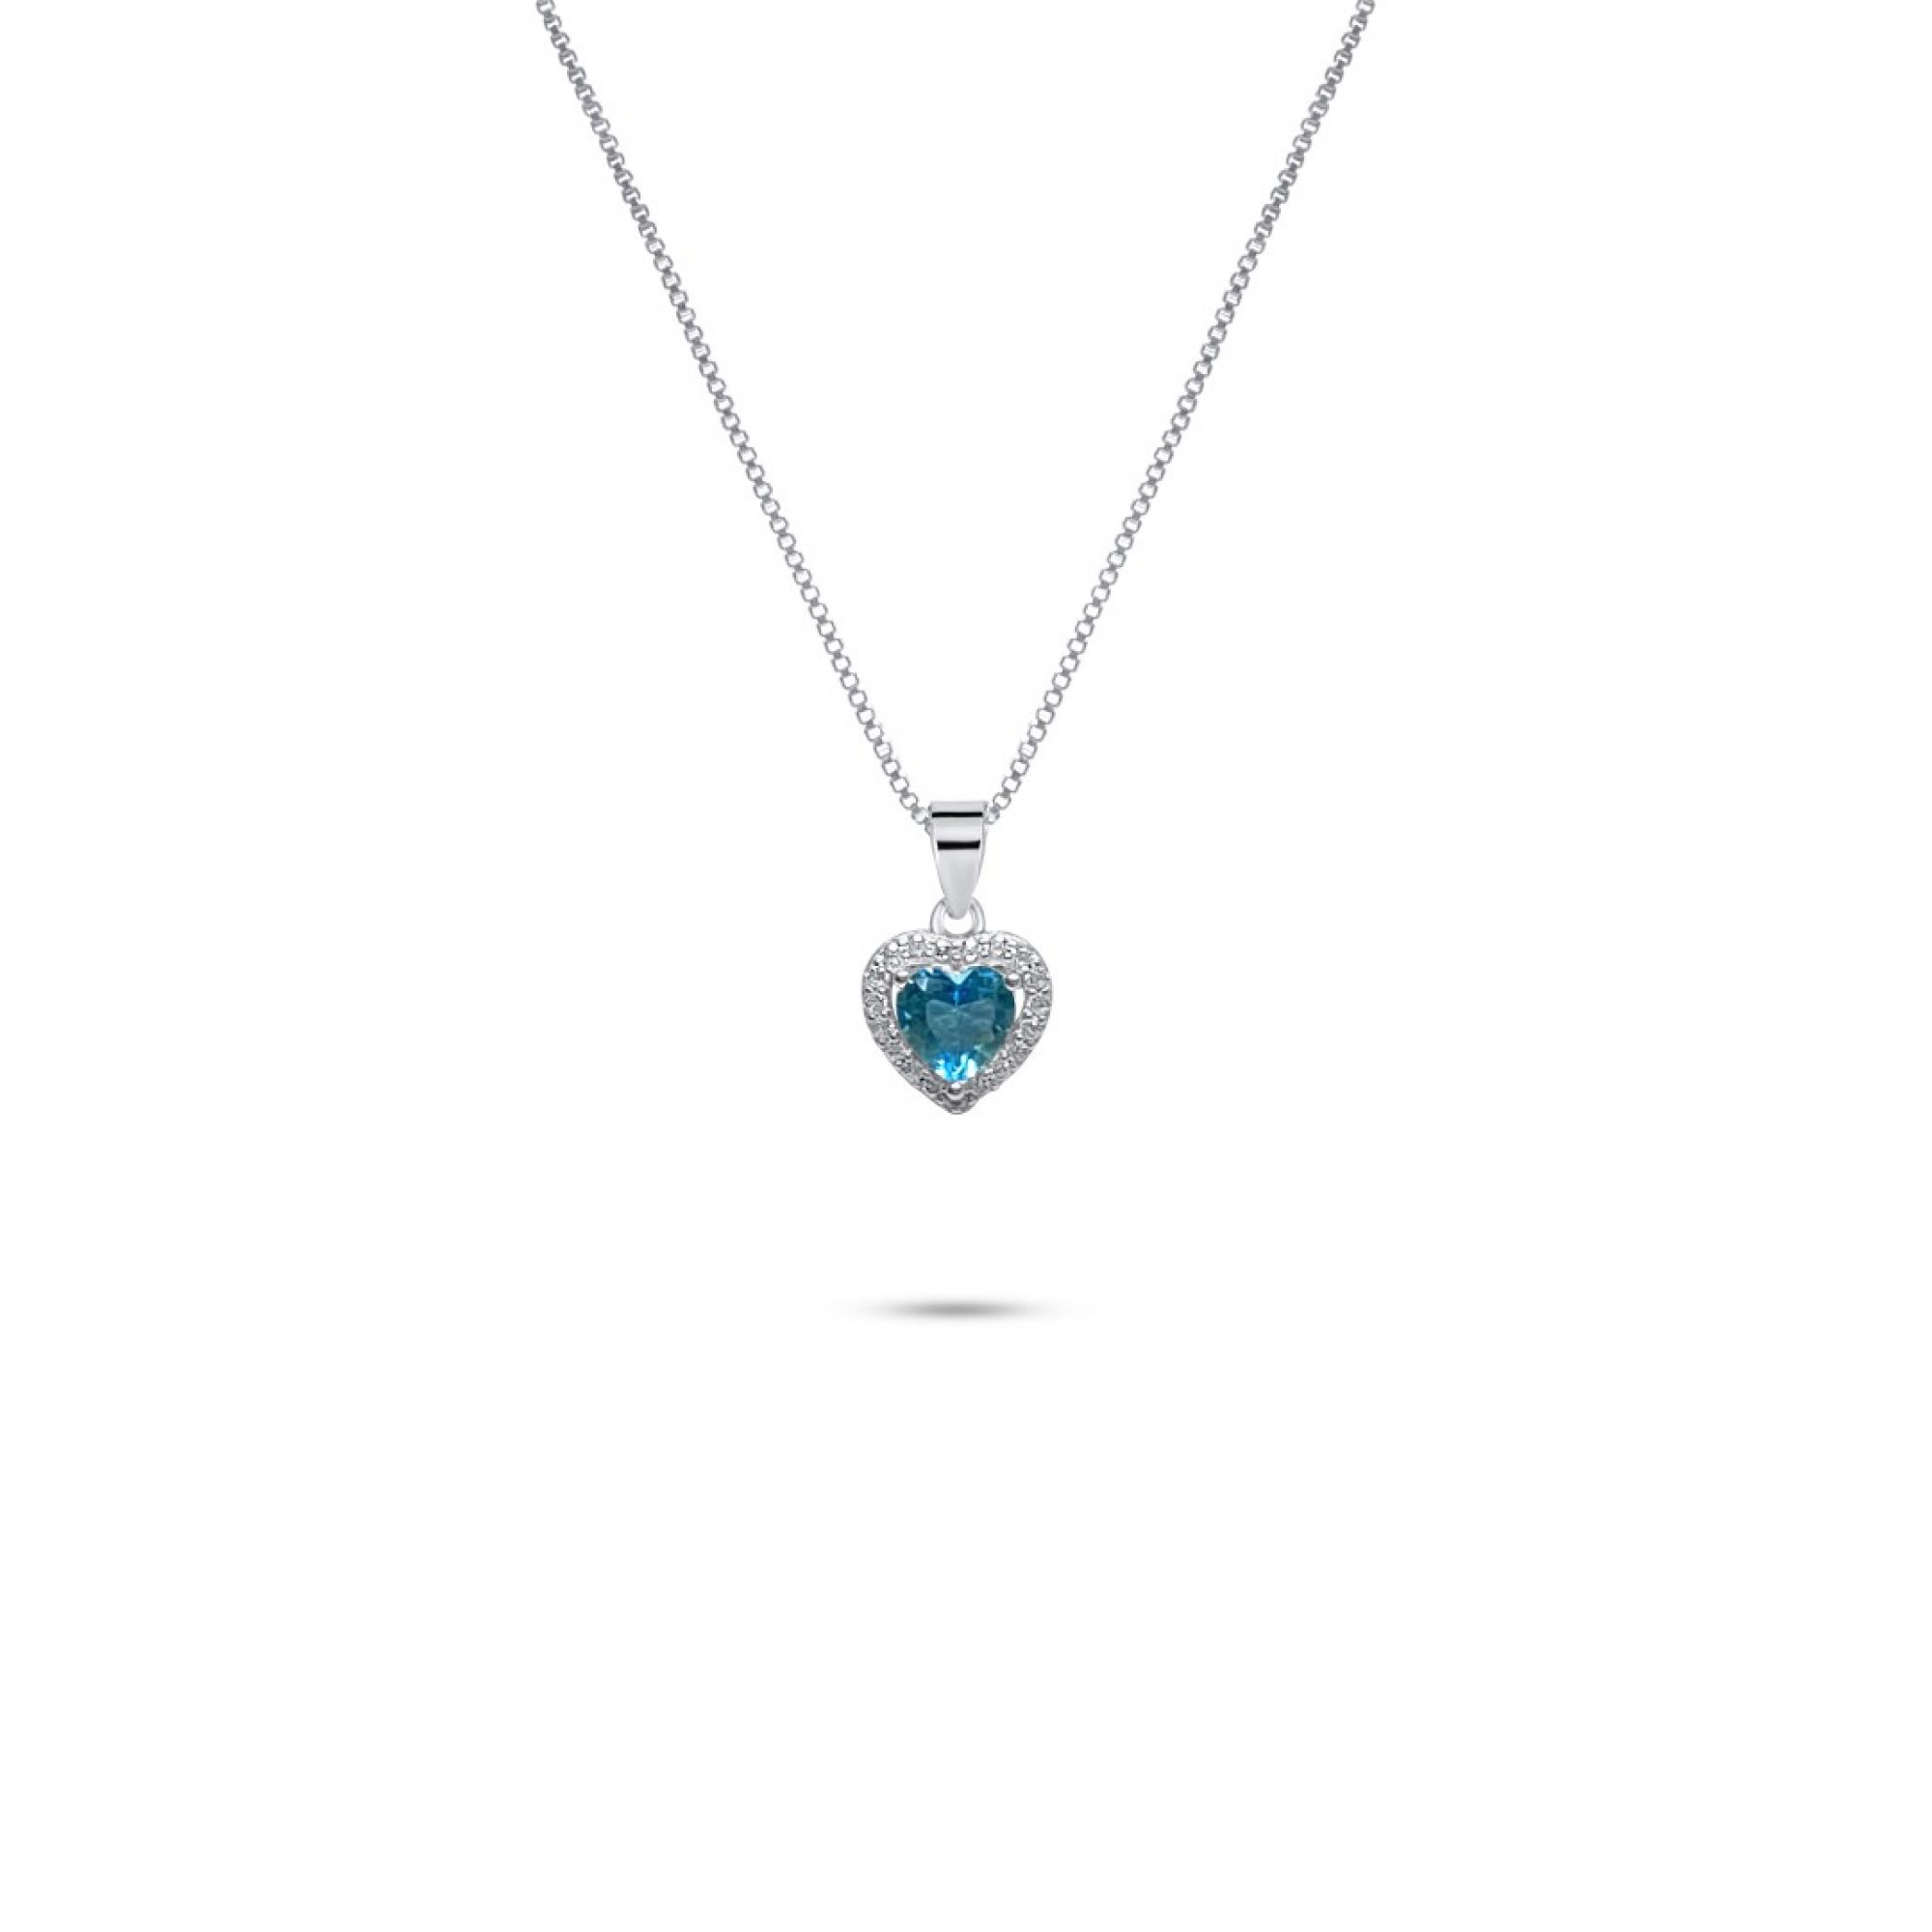 Heart necklace with aquamarine and zircon stones